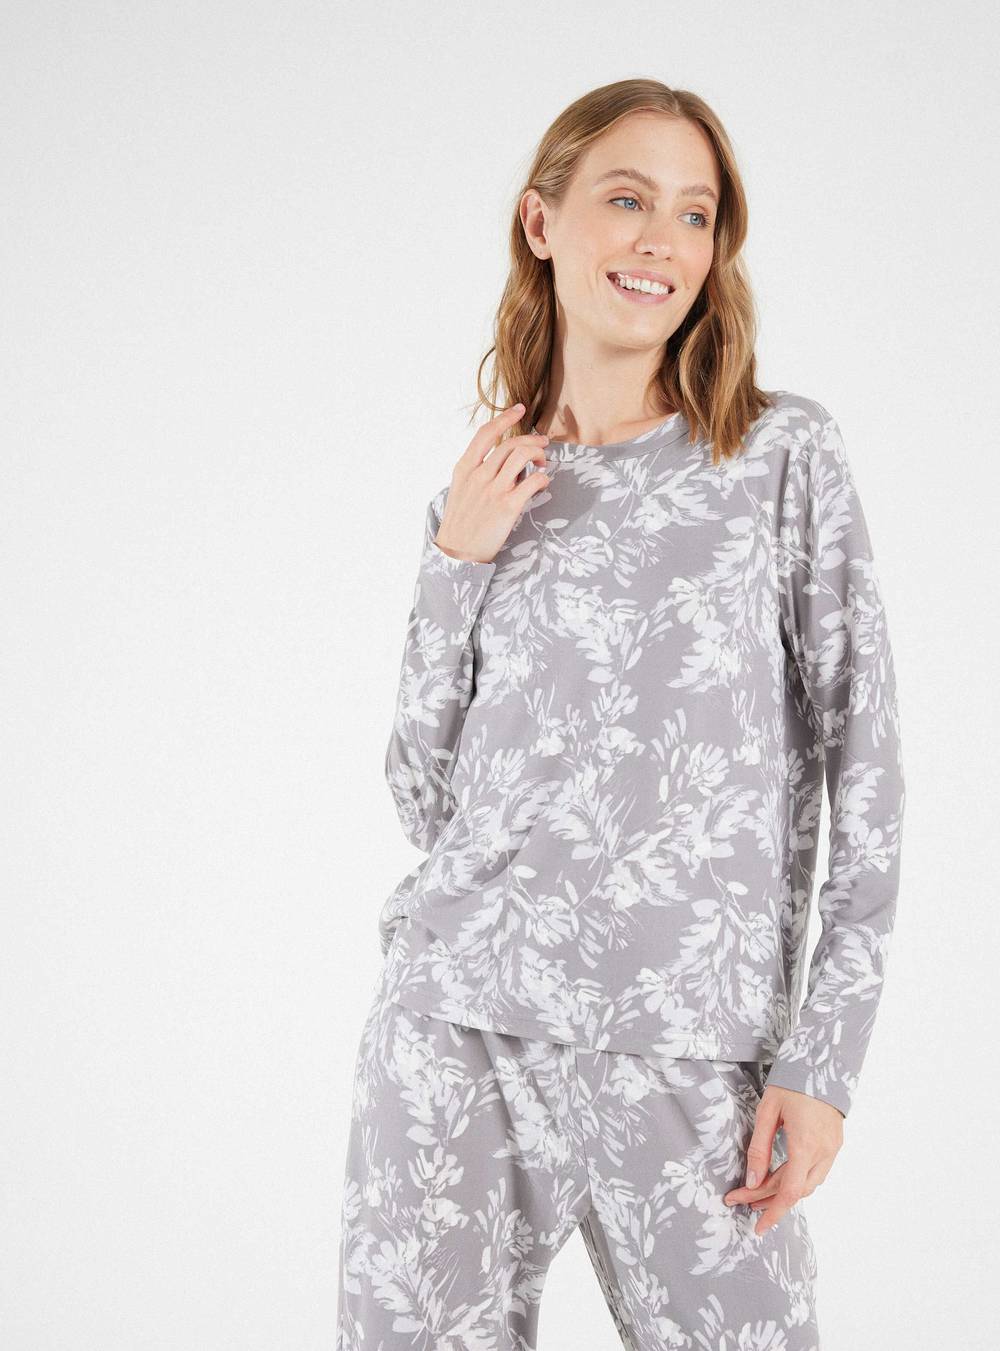 Mariti pijamas full print detalles encaje diseño 1 's